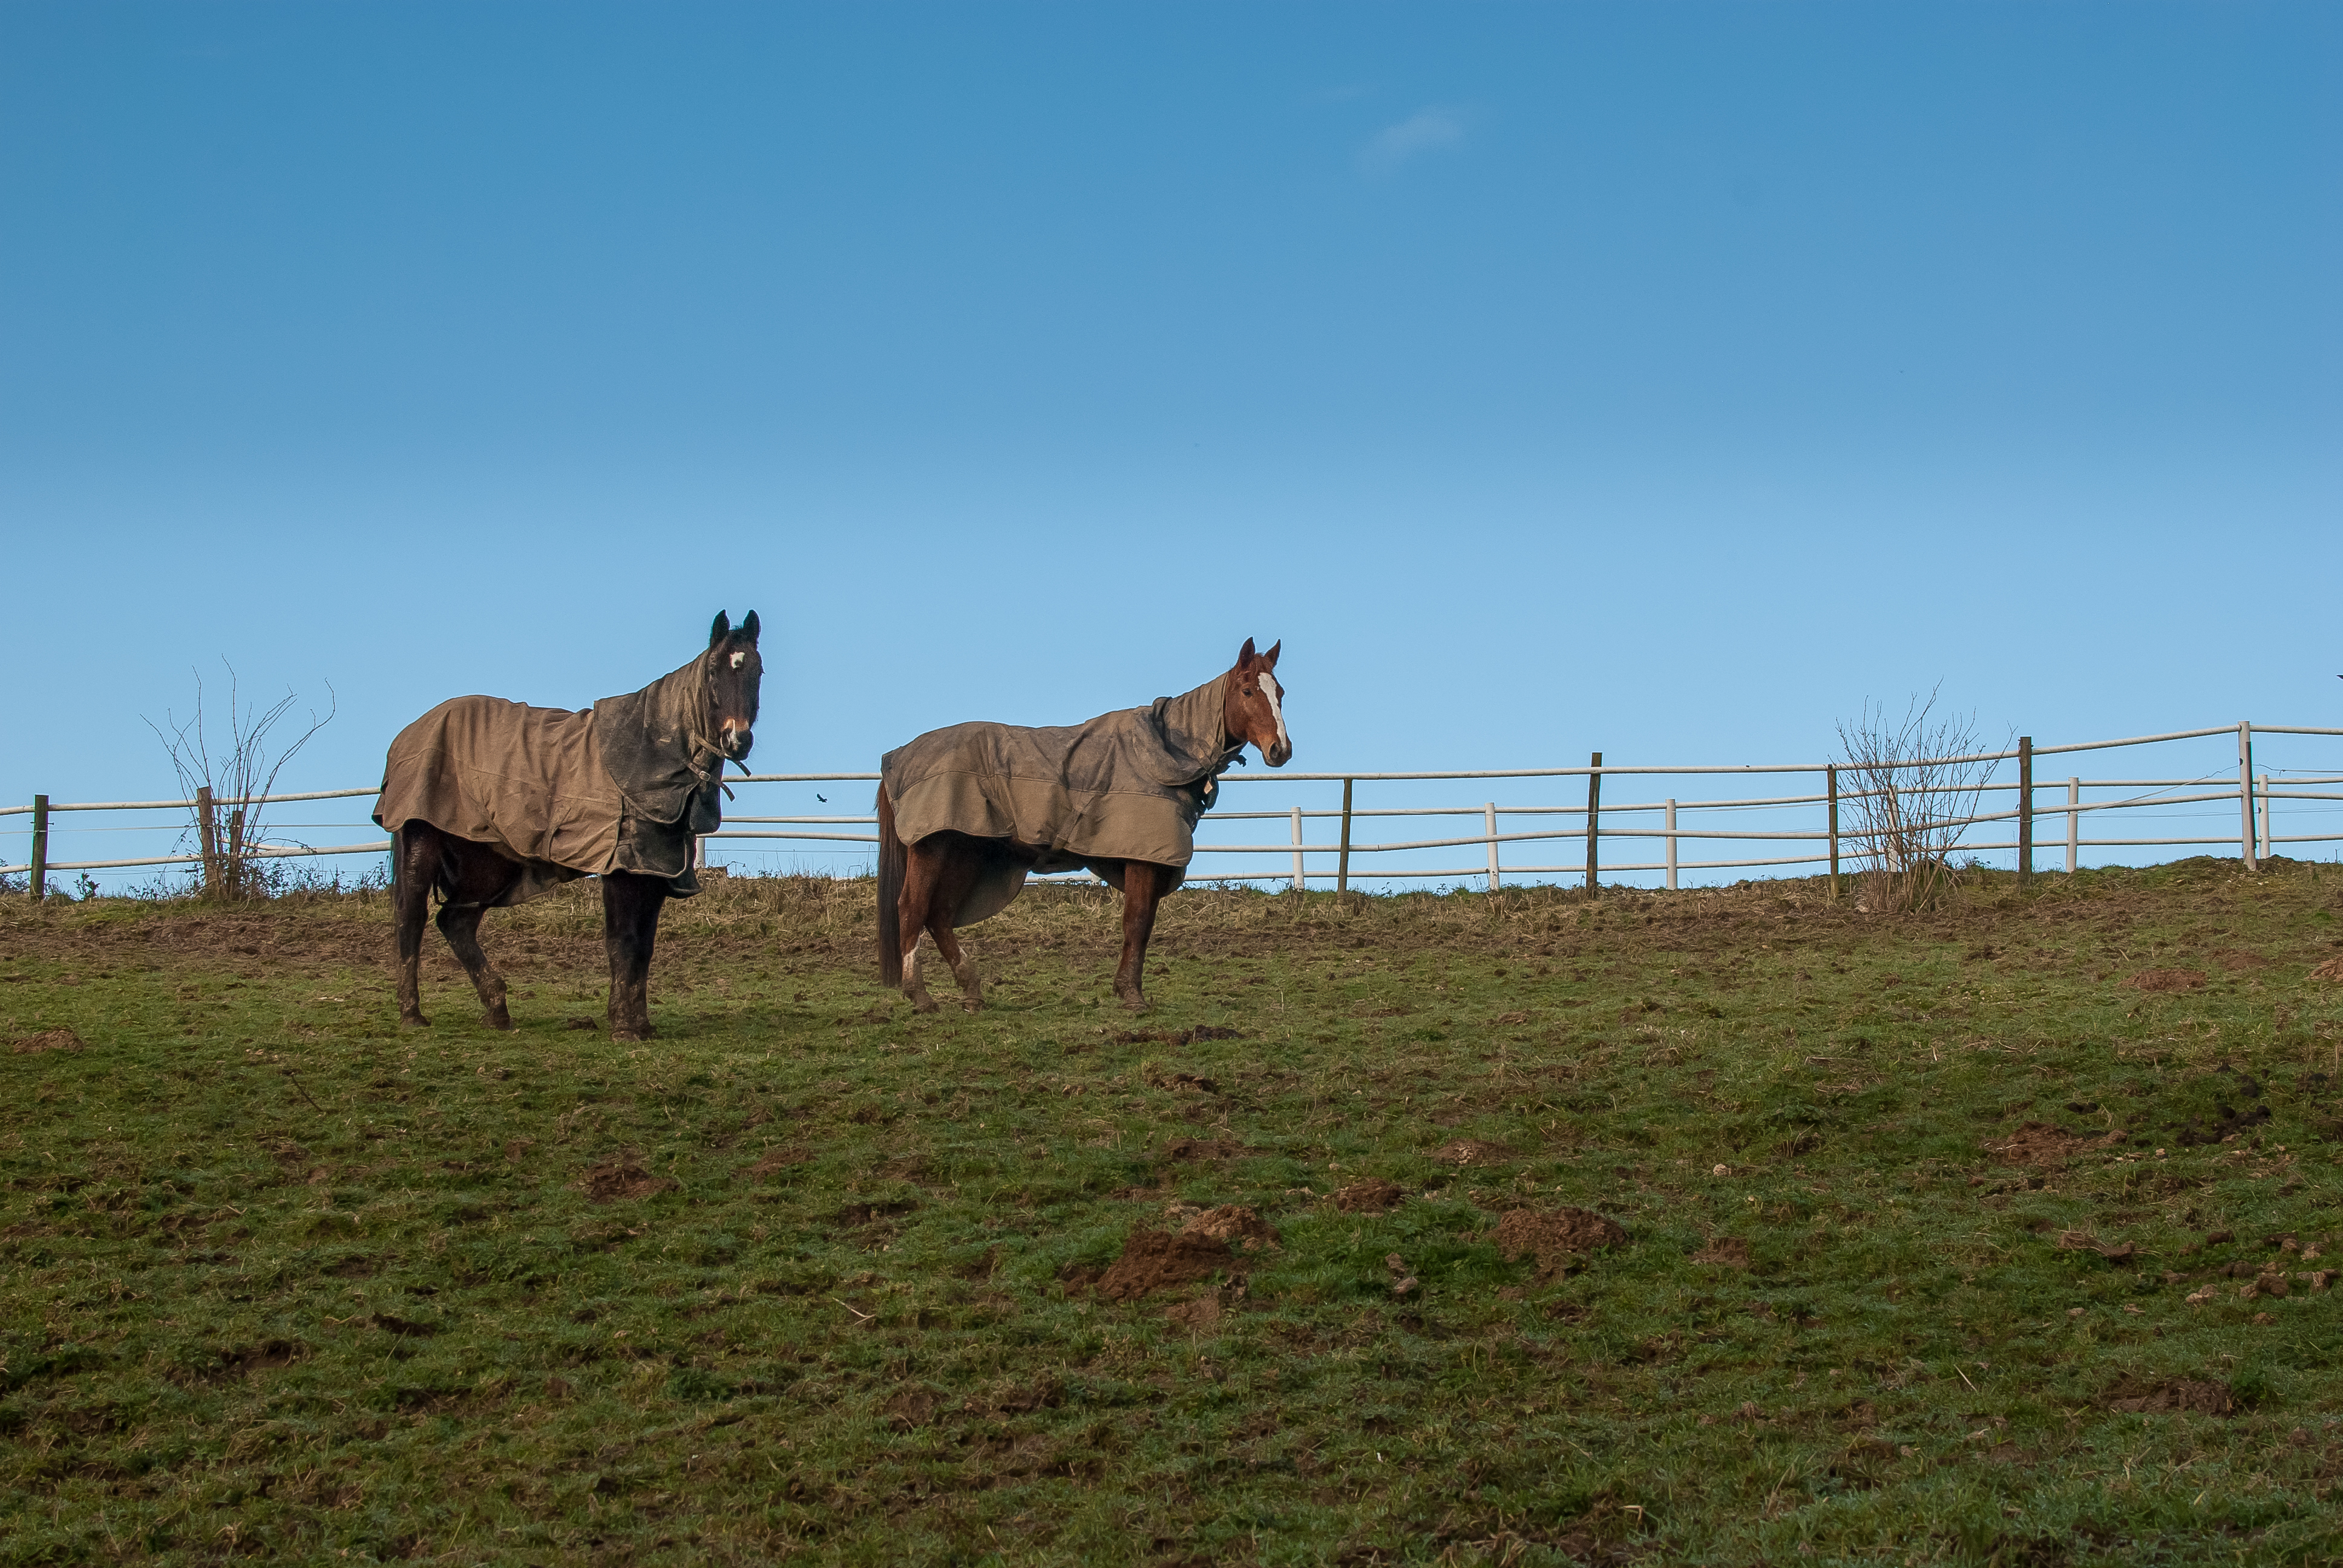 Miser sur le bon cheval, Animal, Field, Grass, Livestock, HQ Photo